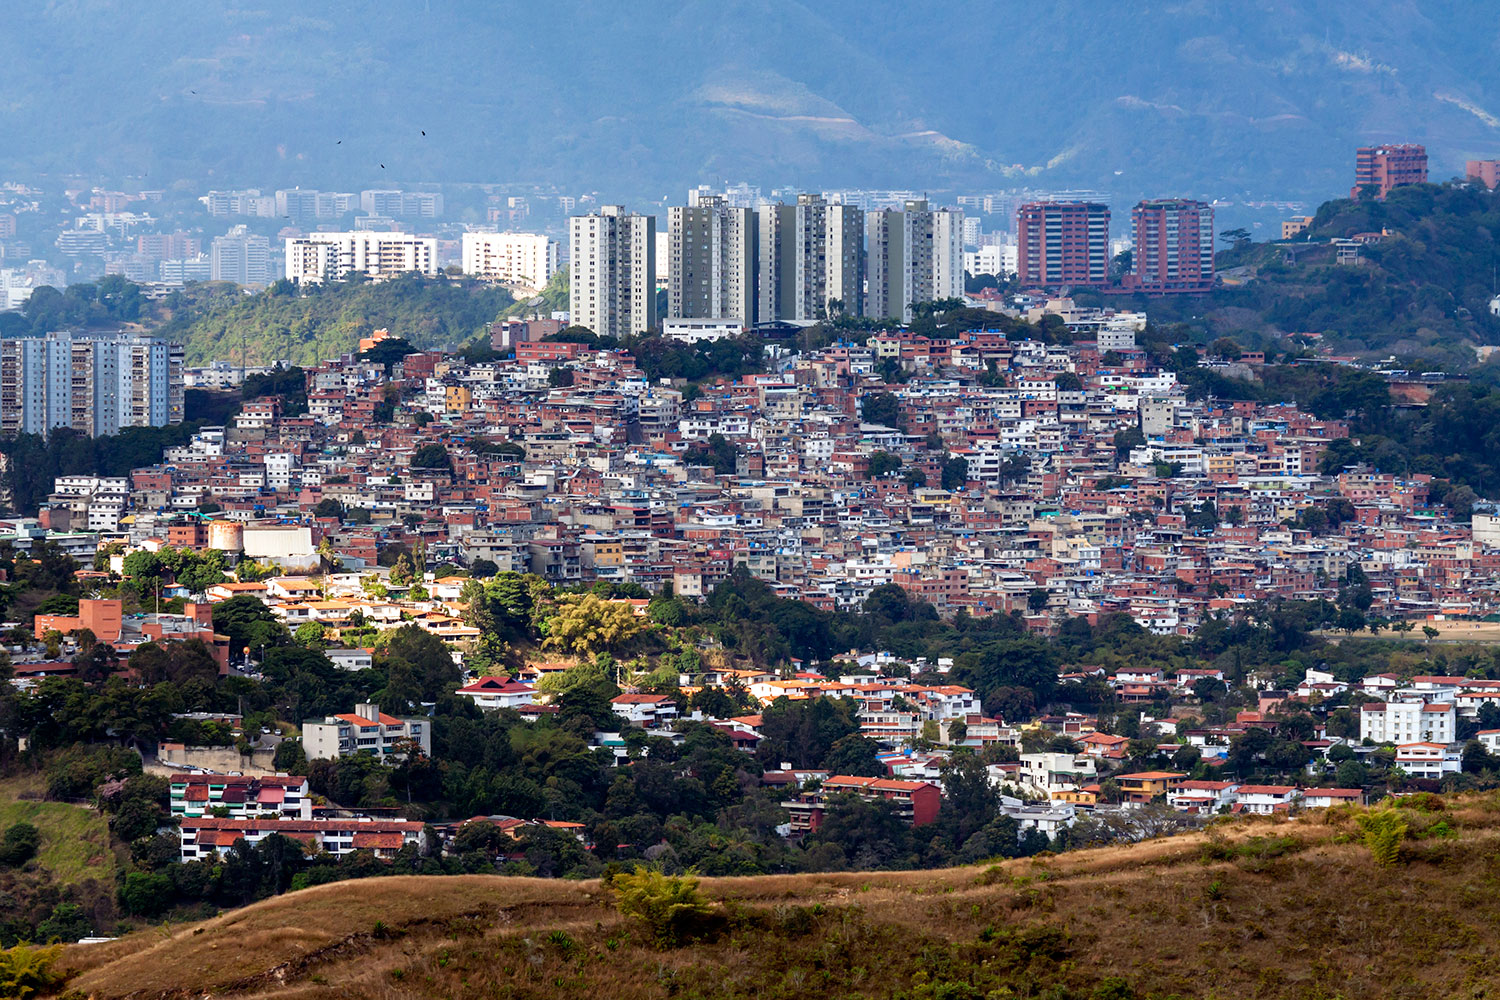 barrios desfavorecidos de Caracas